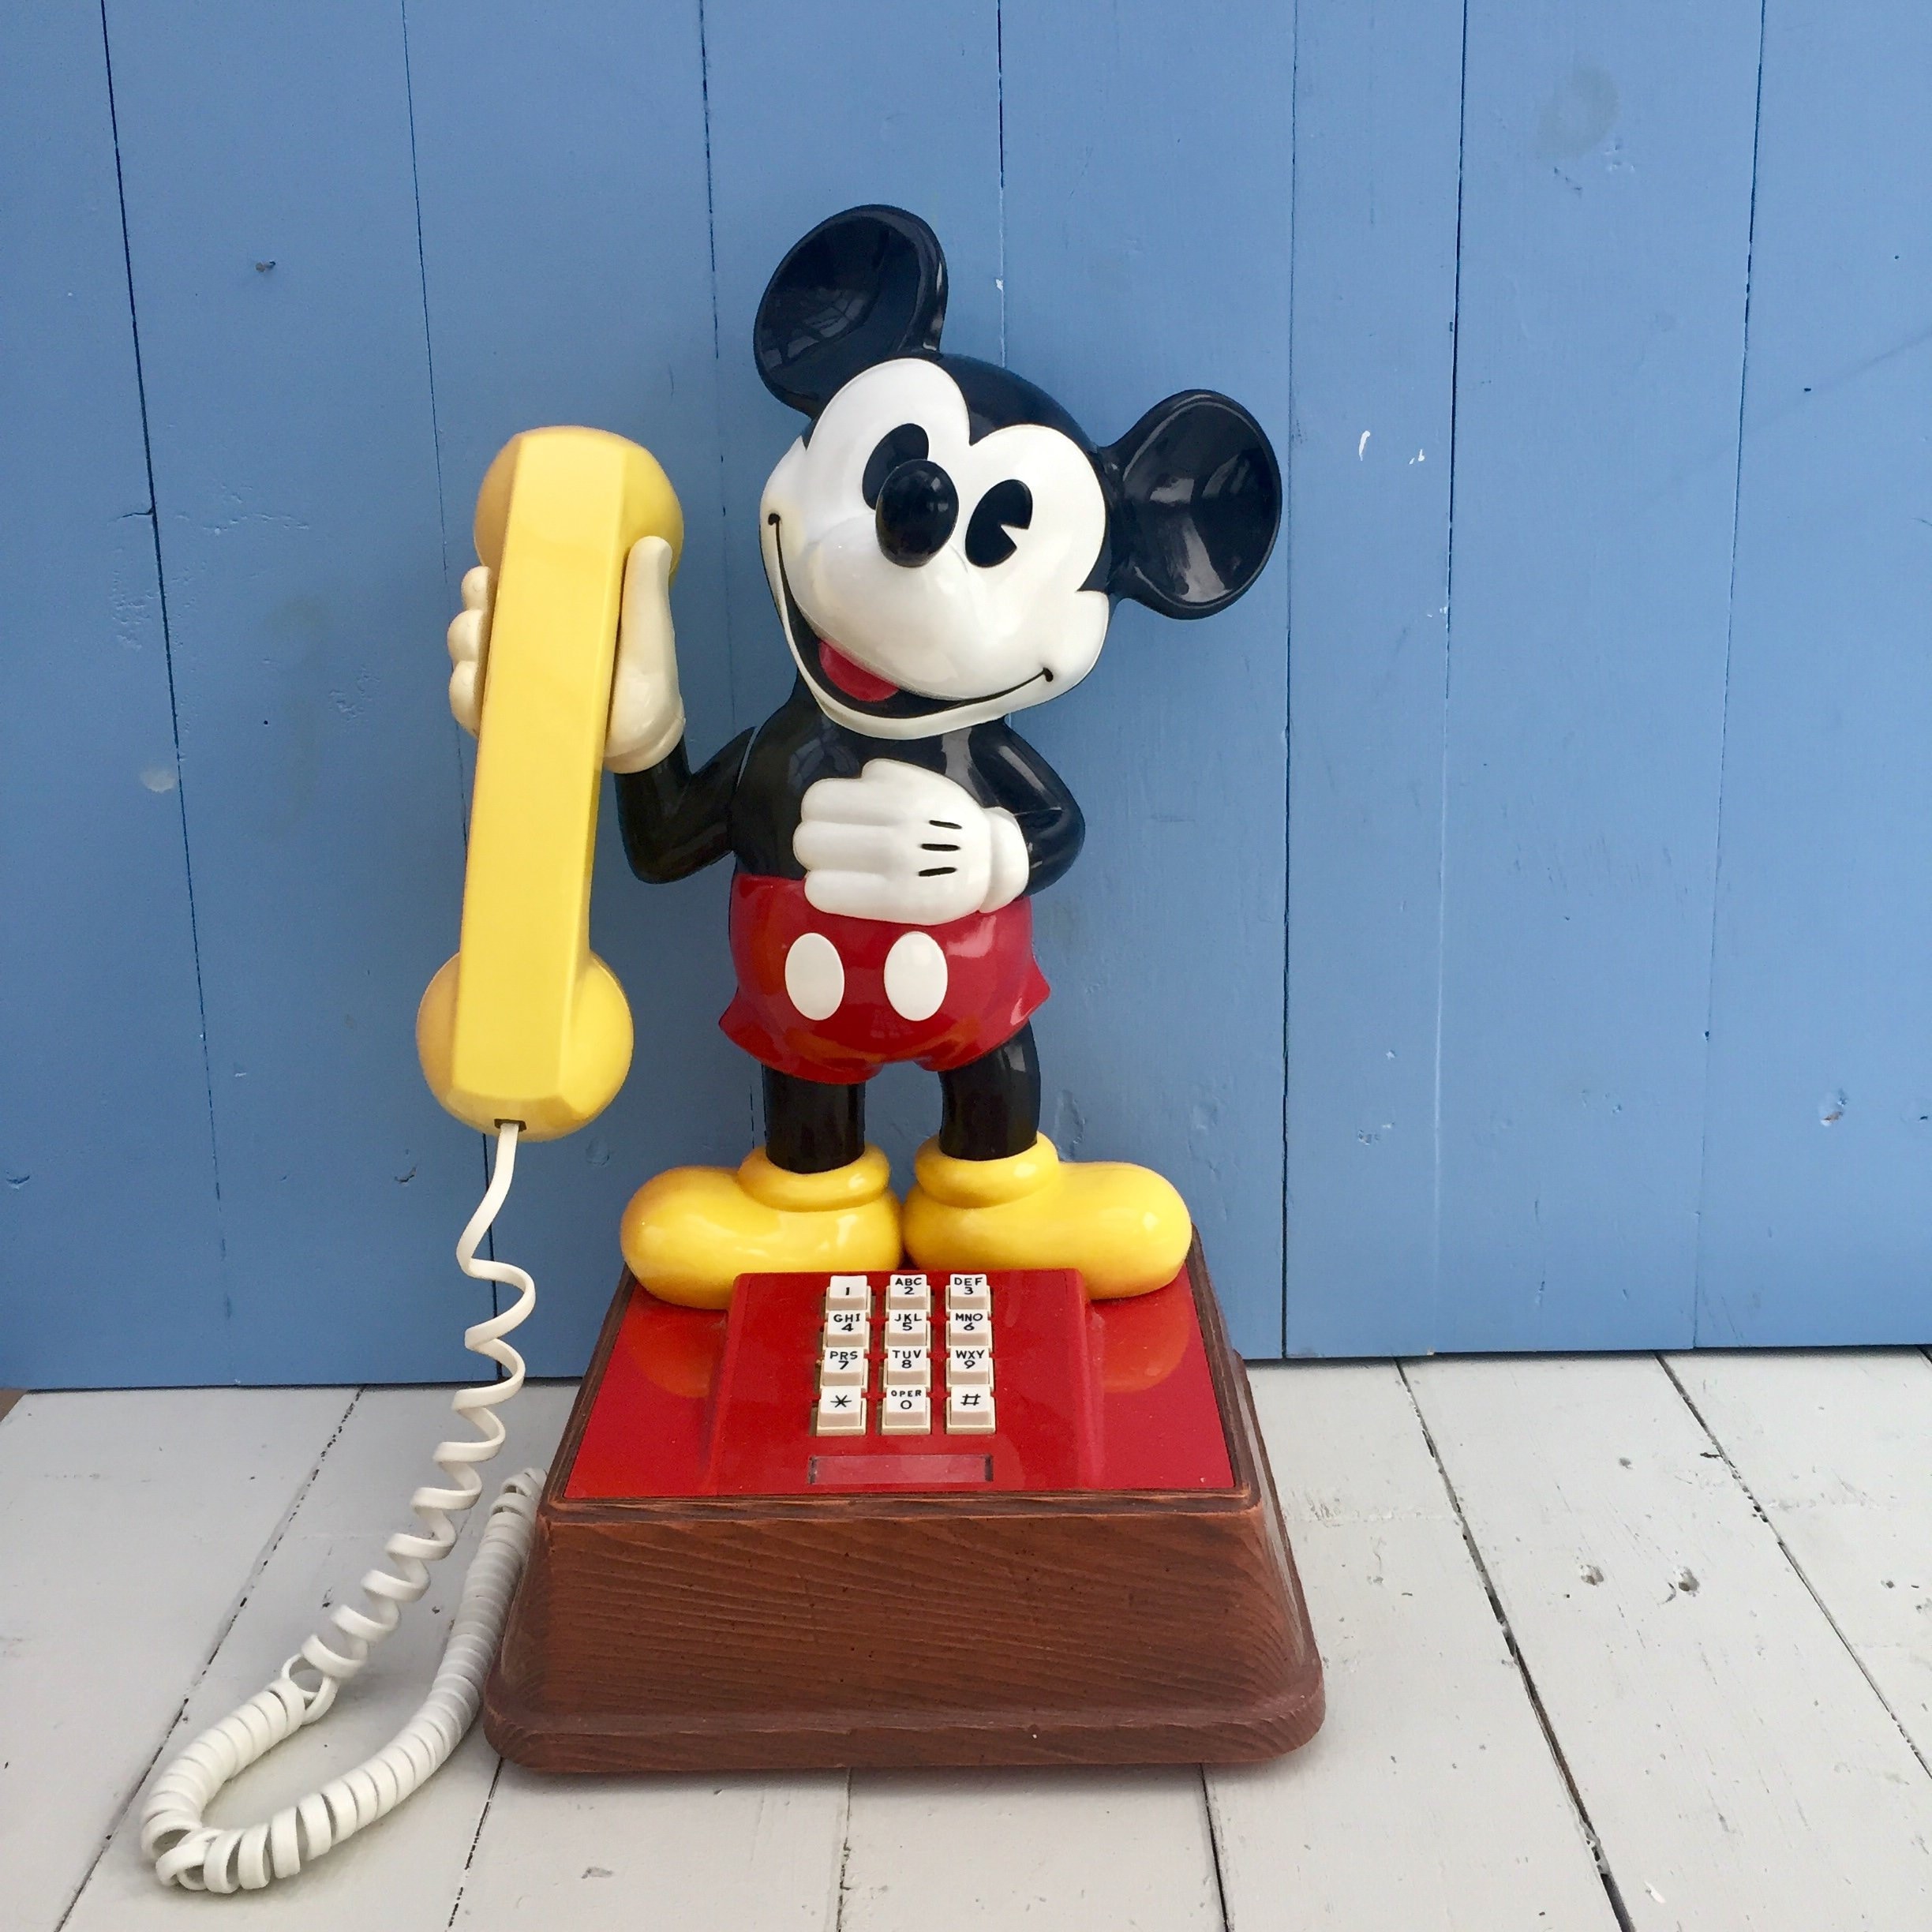 Mickey Mouse vintage Phone np.gov.lk